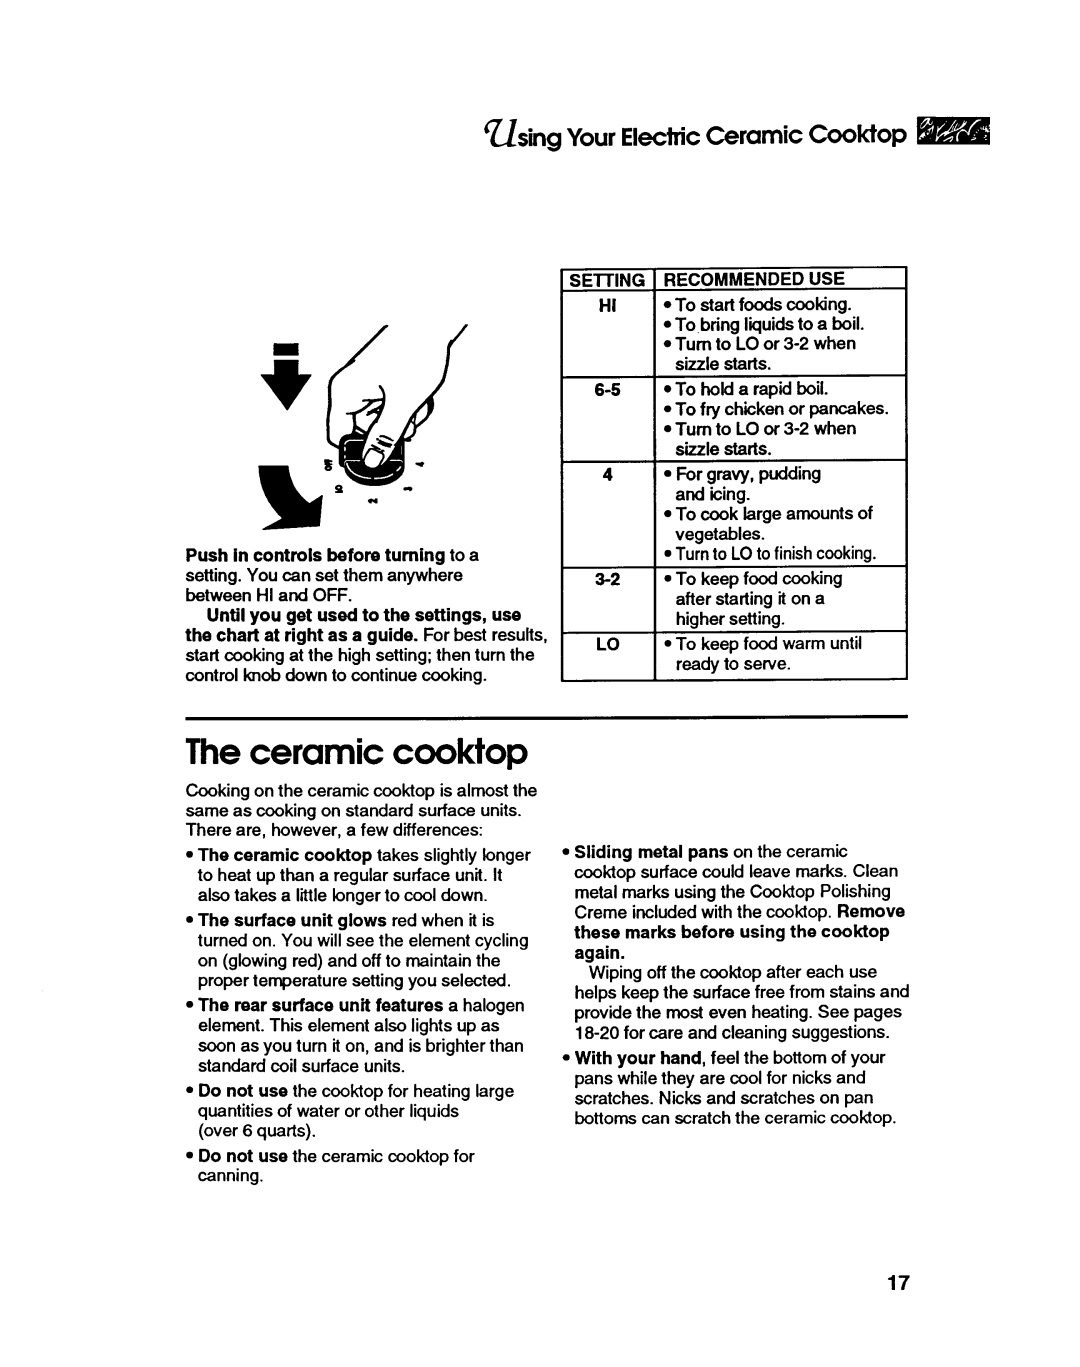 KitchenAid KECT025, KSVD060 manual 